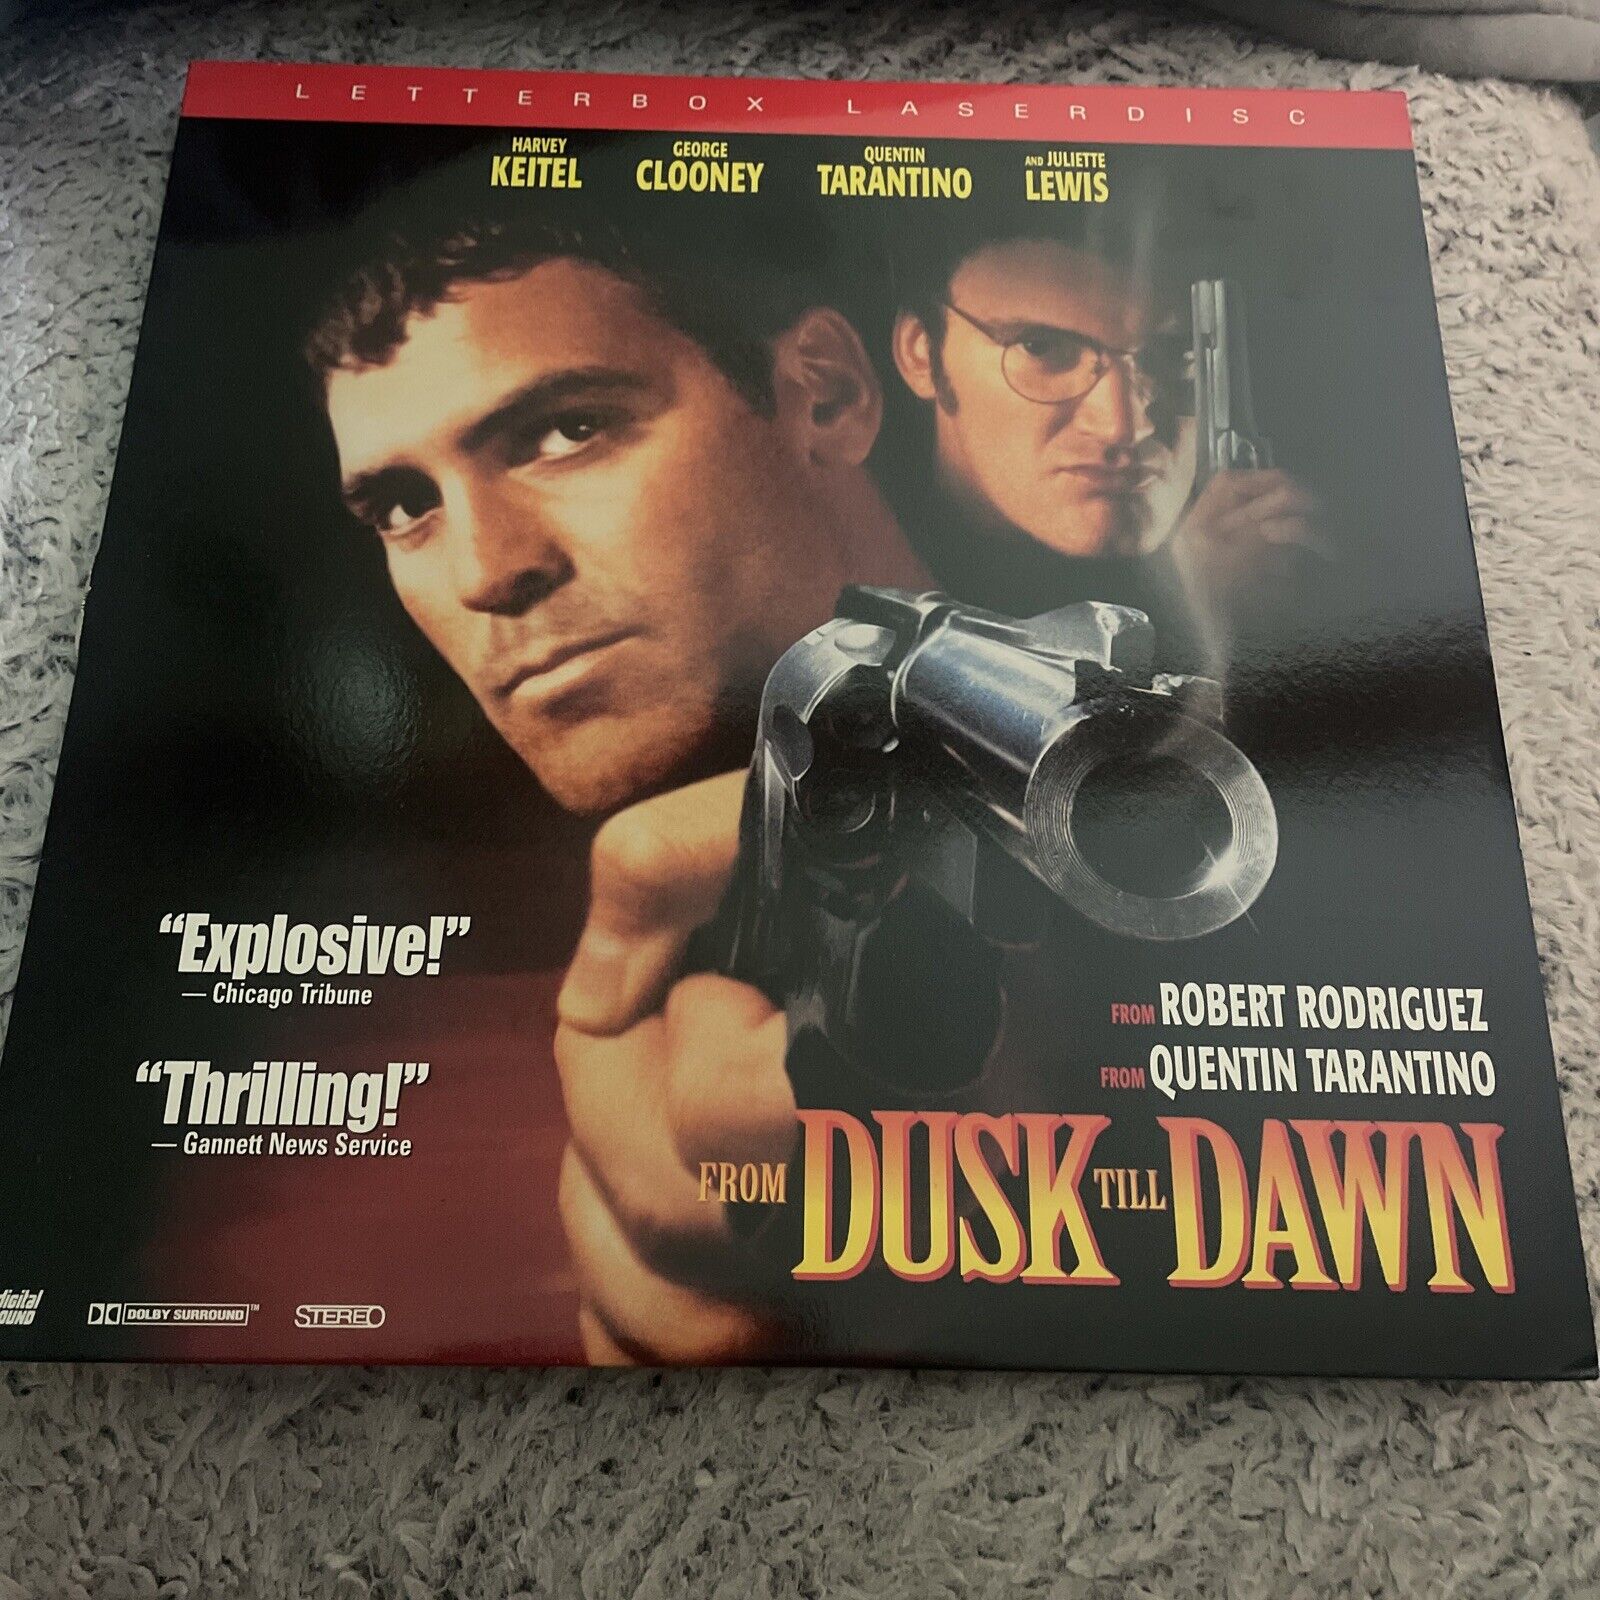 From Dusk Till Dawn (Laserdisc, 1996)